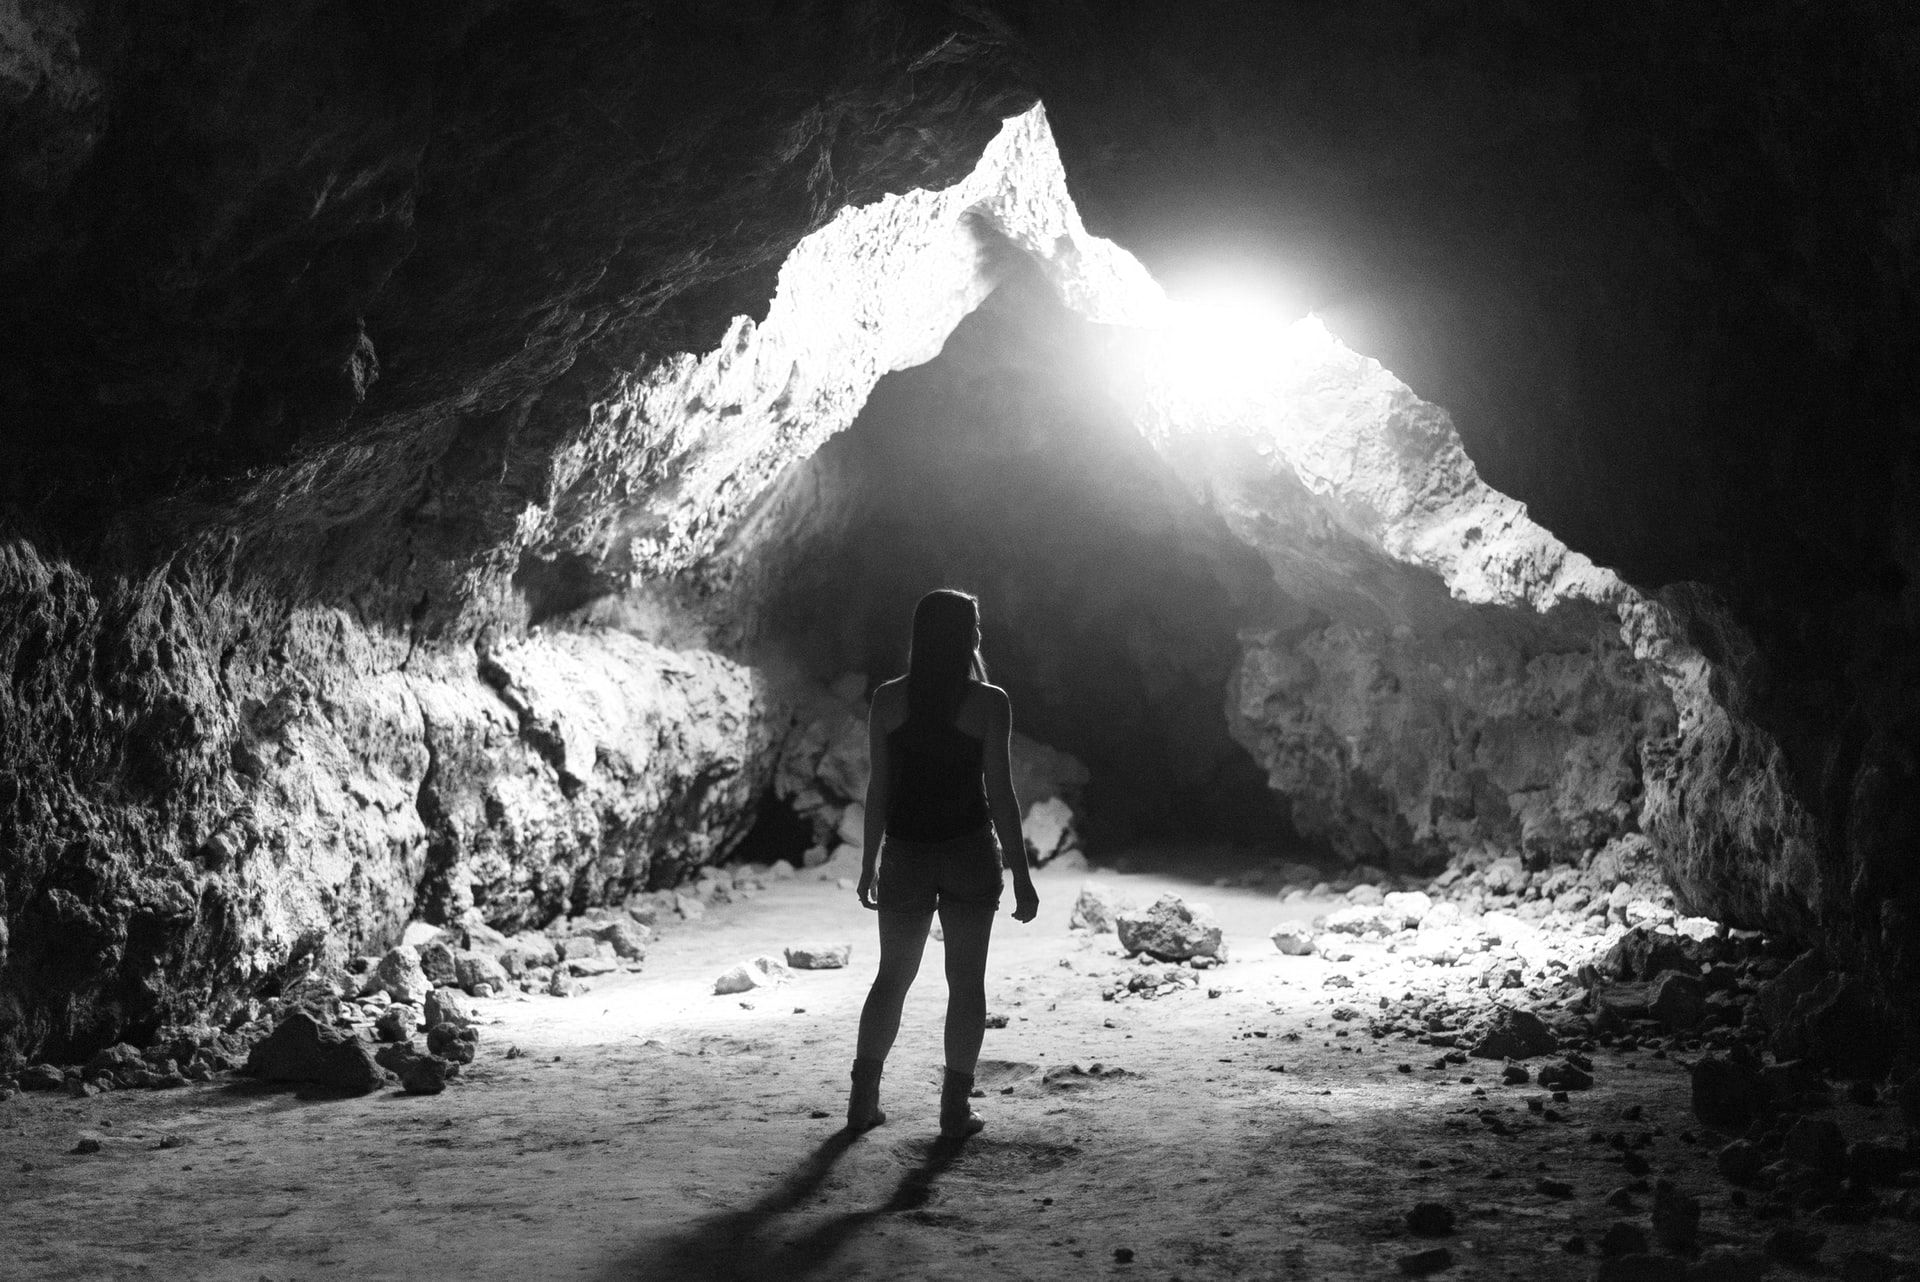 A woman exploring desert caves